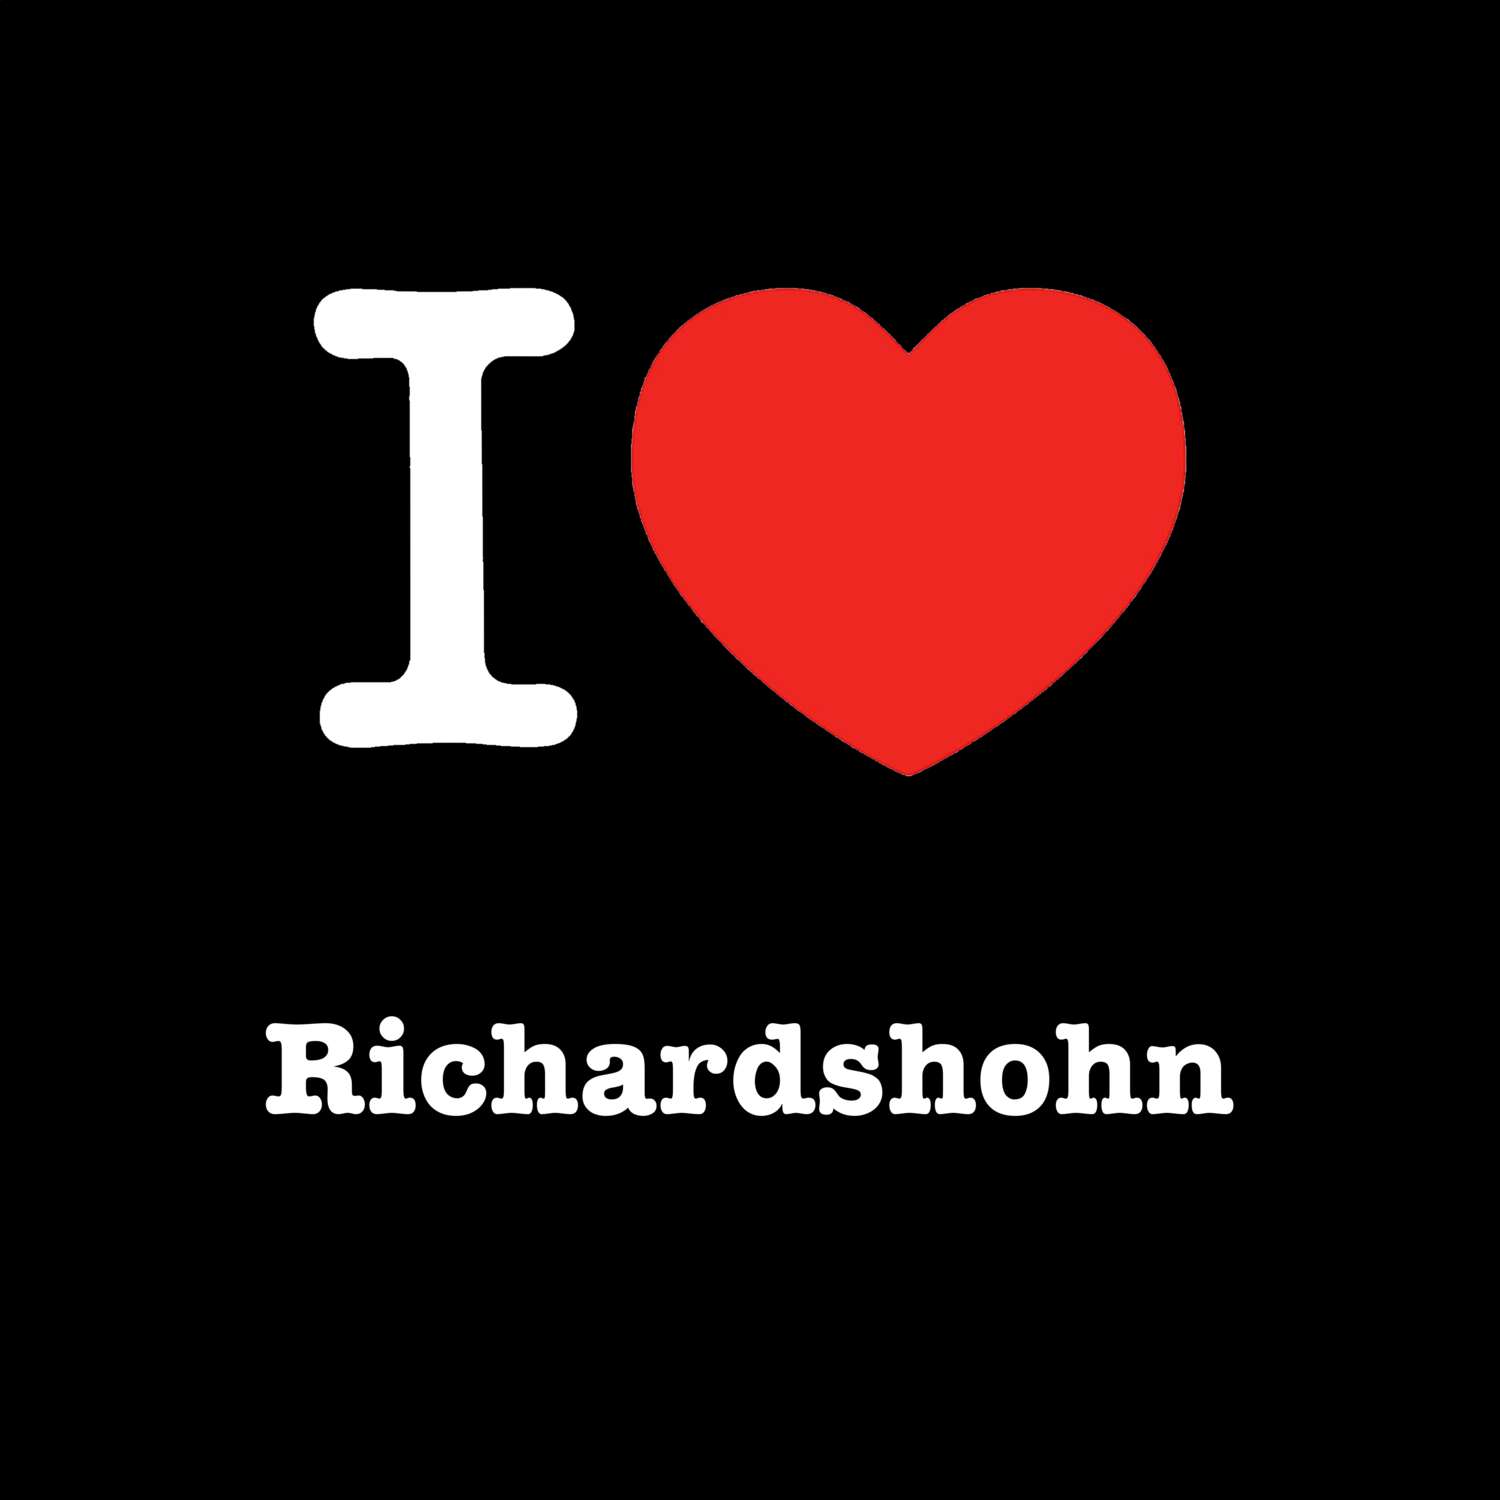 Richardshohn T-Shirt »I love«